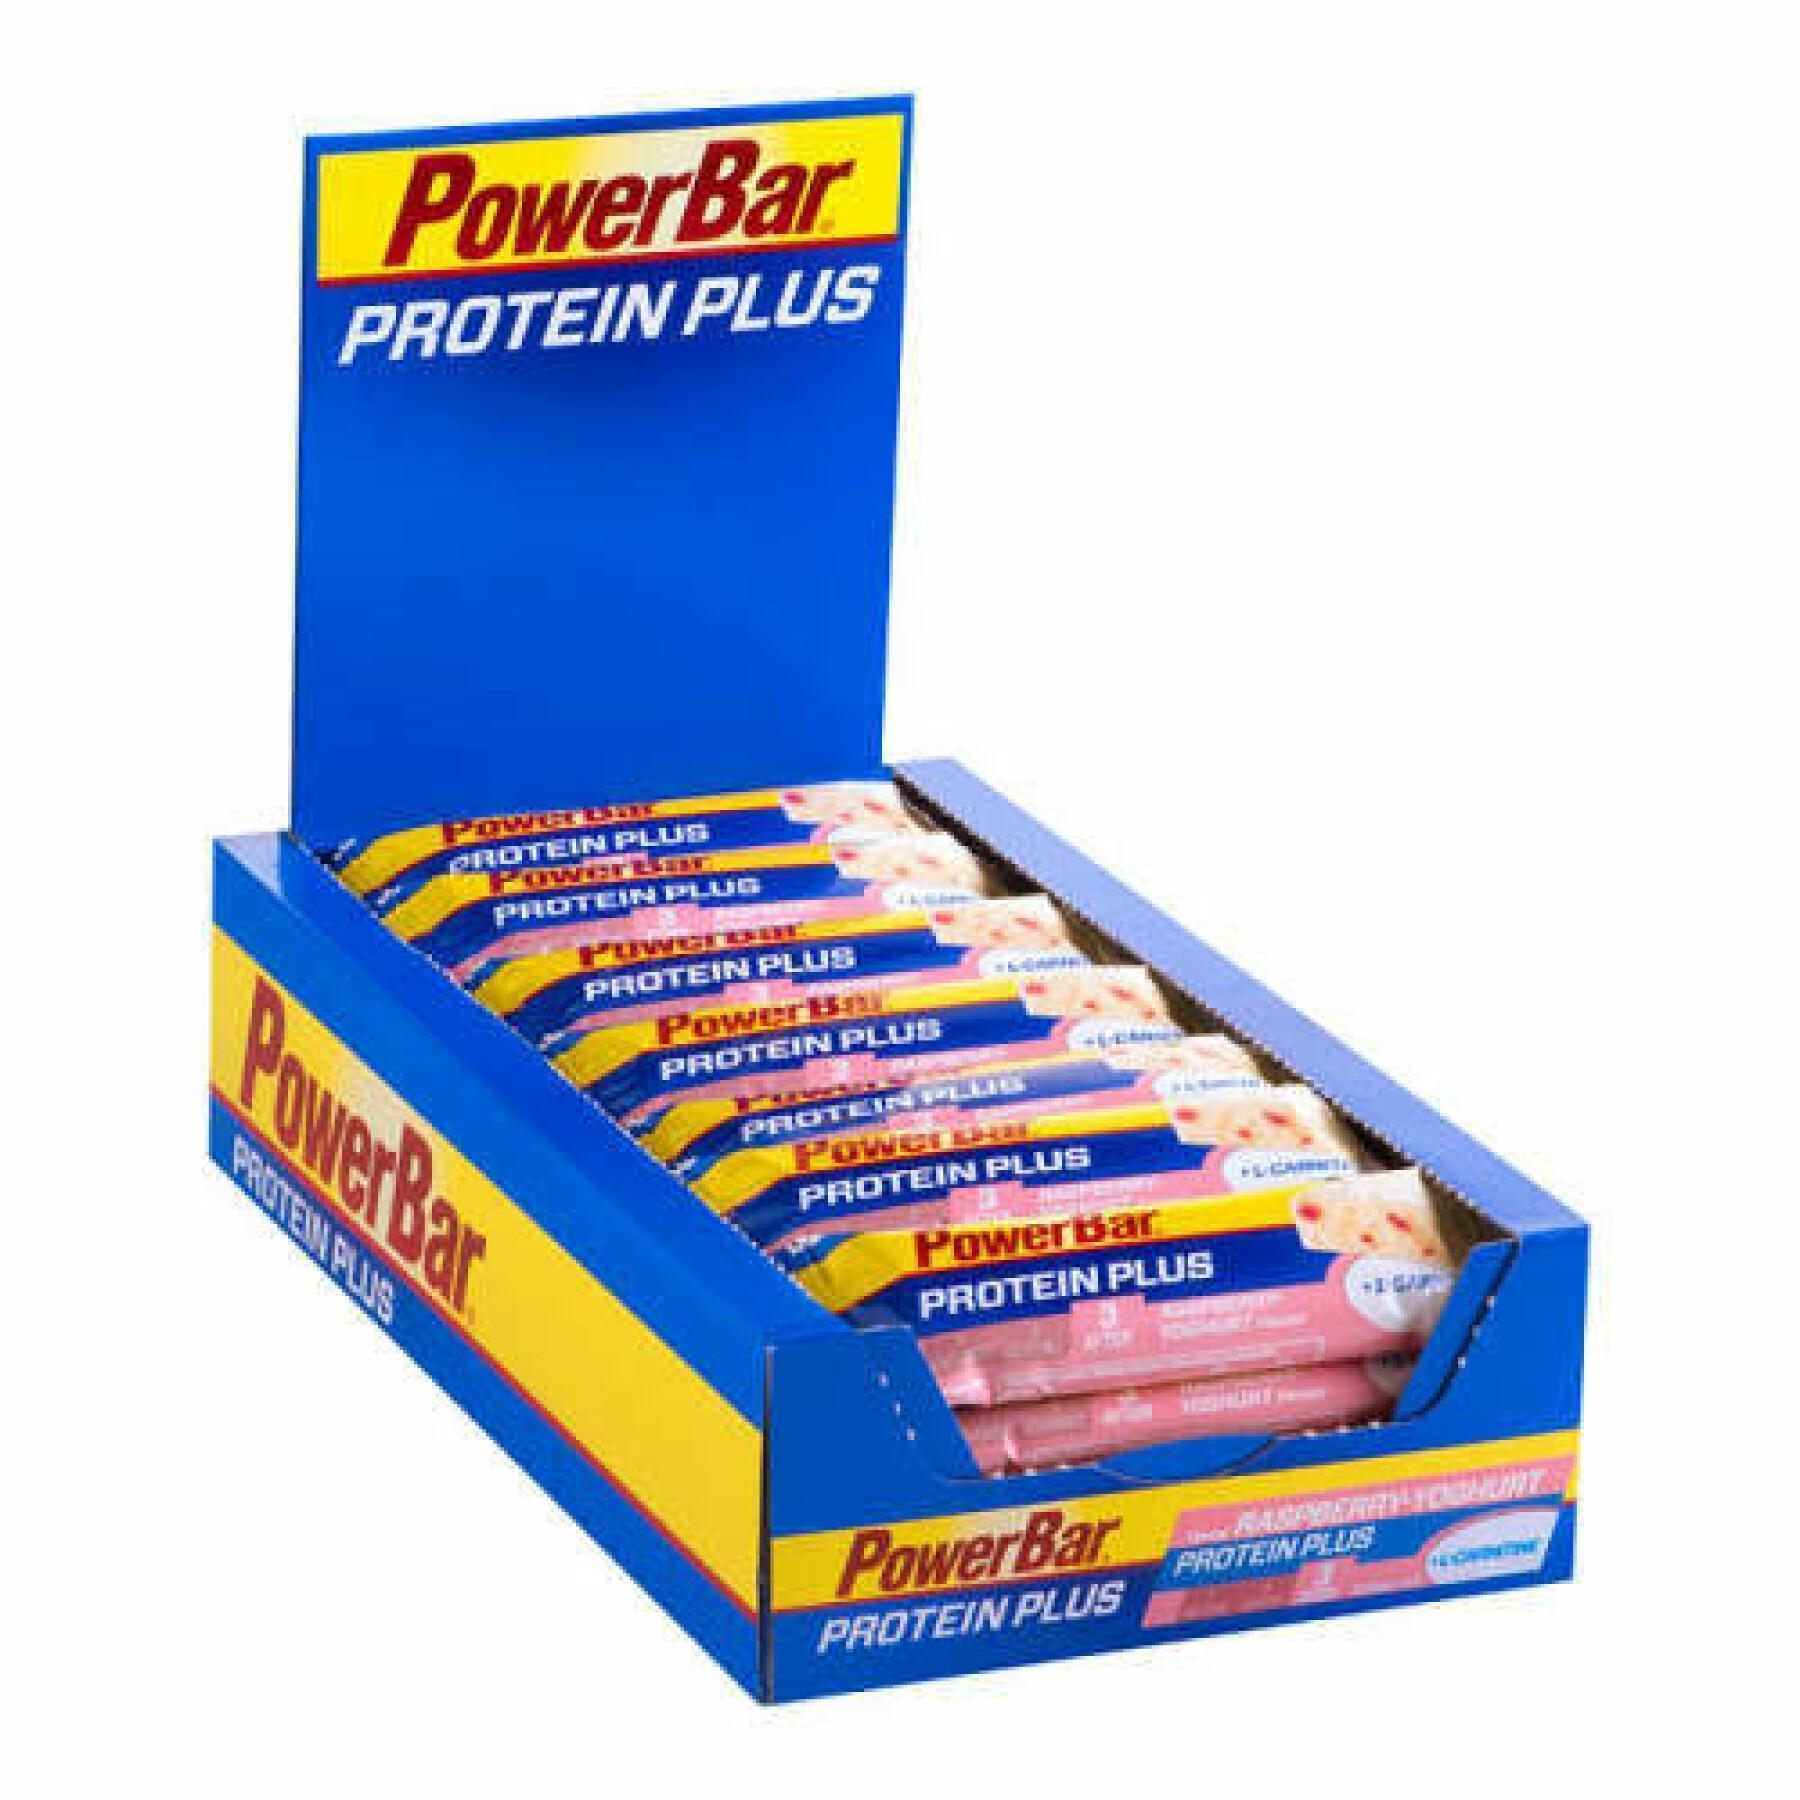 Pacote de 30 barras PowerBar ProteinPlus L-Carnitin - Raspberry-Yoghurt